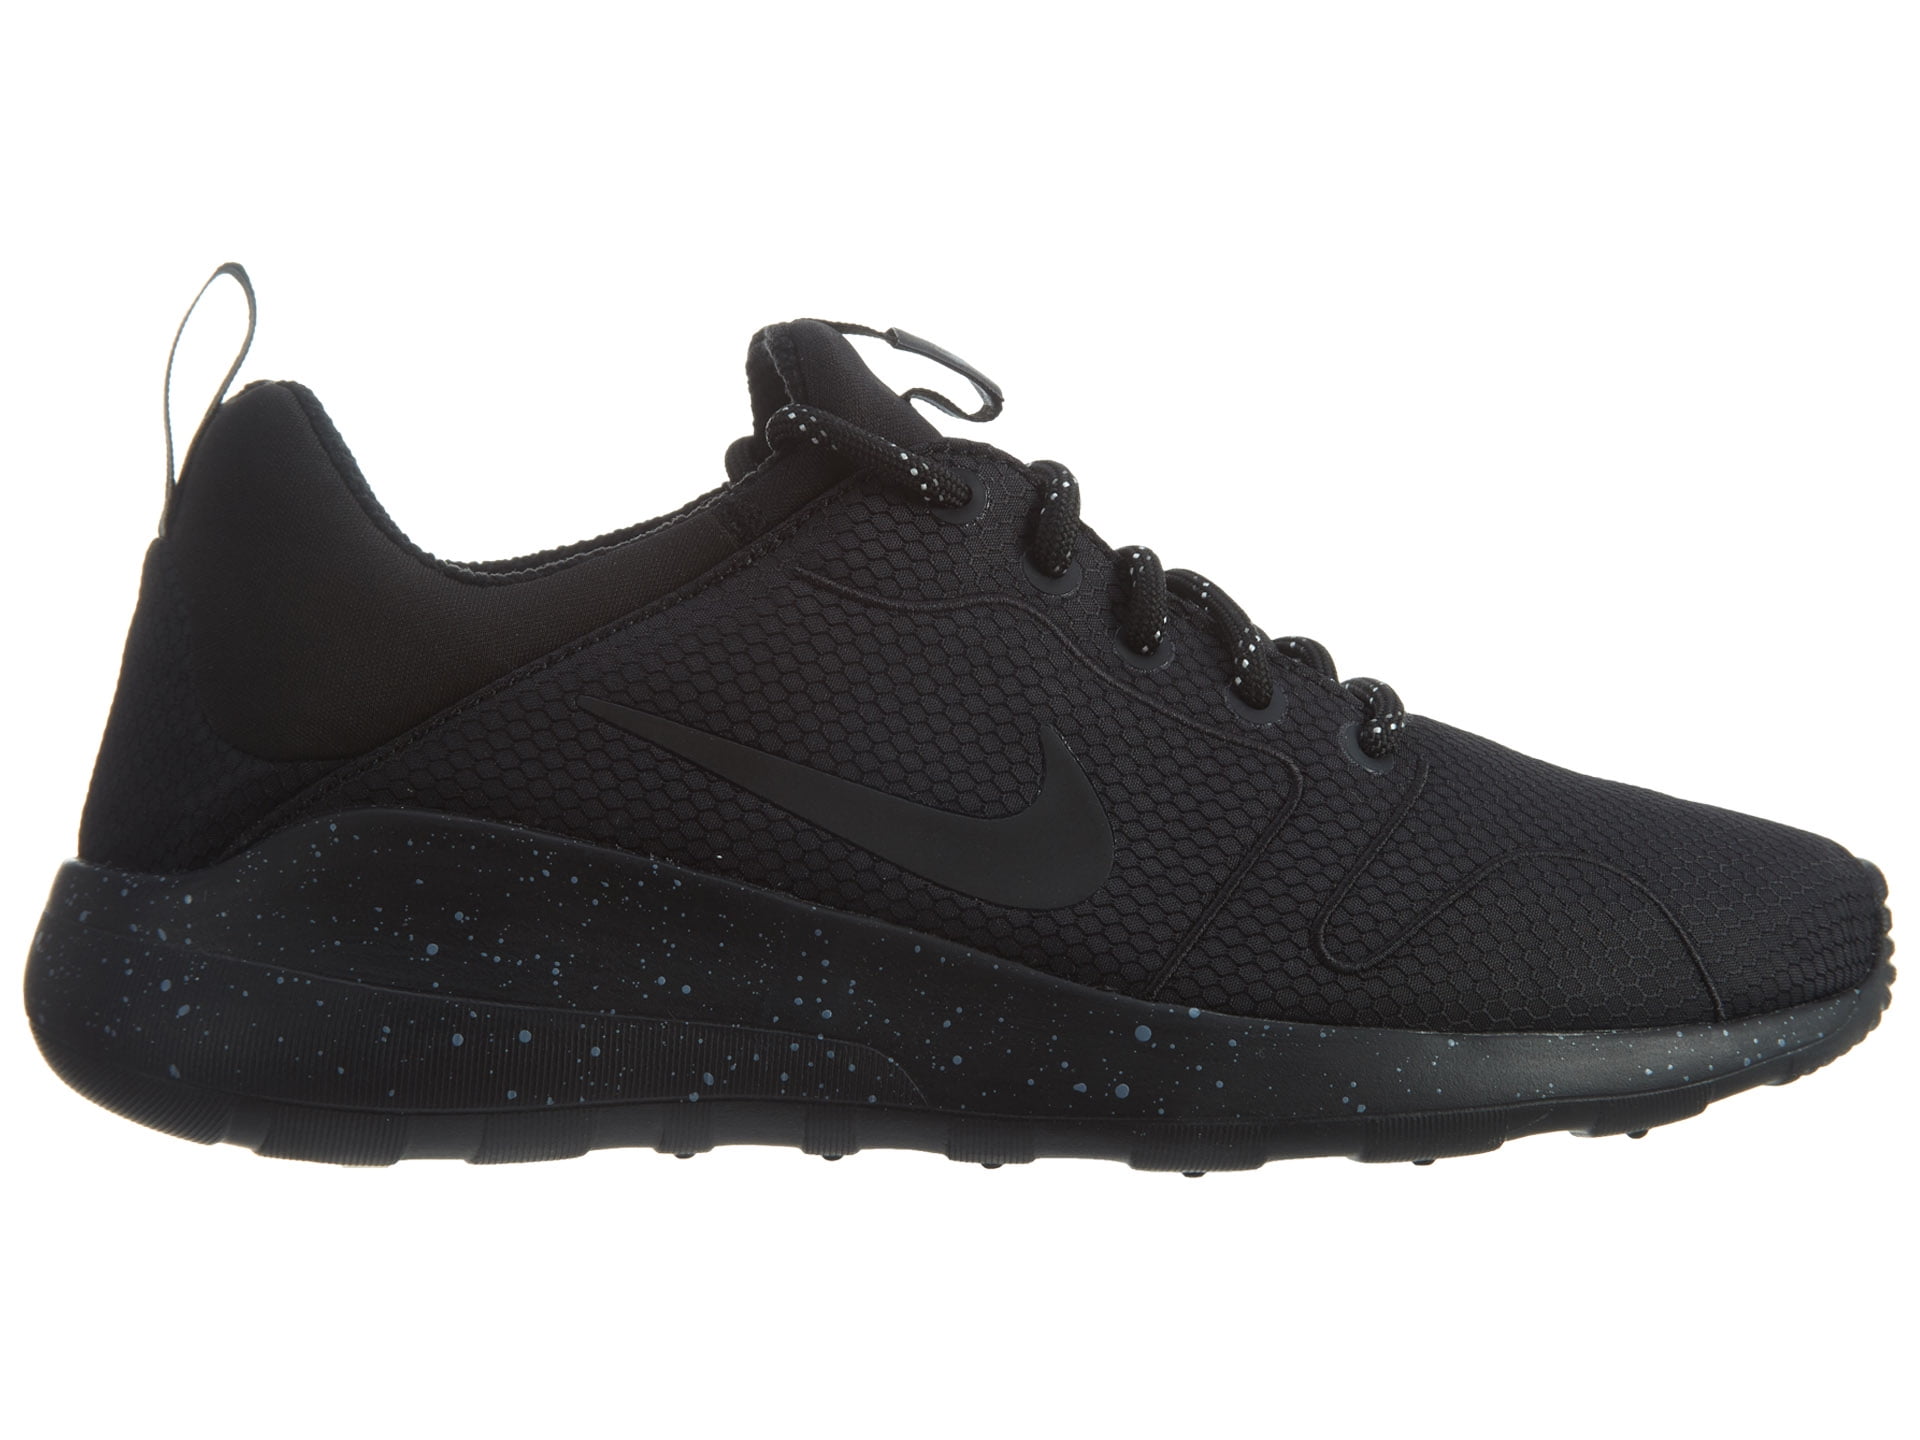 Pech Excentriek Datum Nike Kaishi 2.0 SE Men's Shoes Black/Black/Cool Grey 844838-001 (9.5 D(M)  US) - Walmart.com